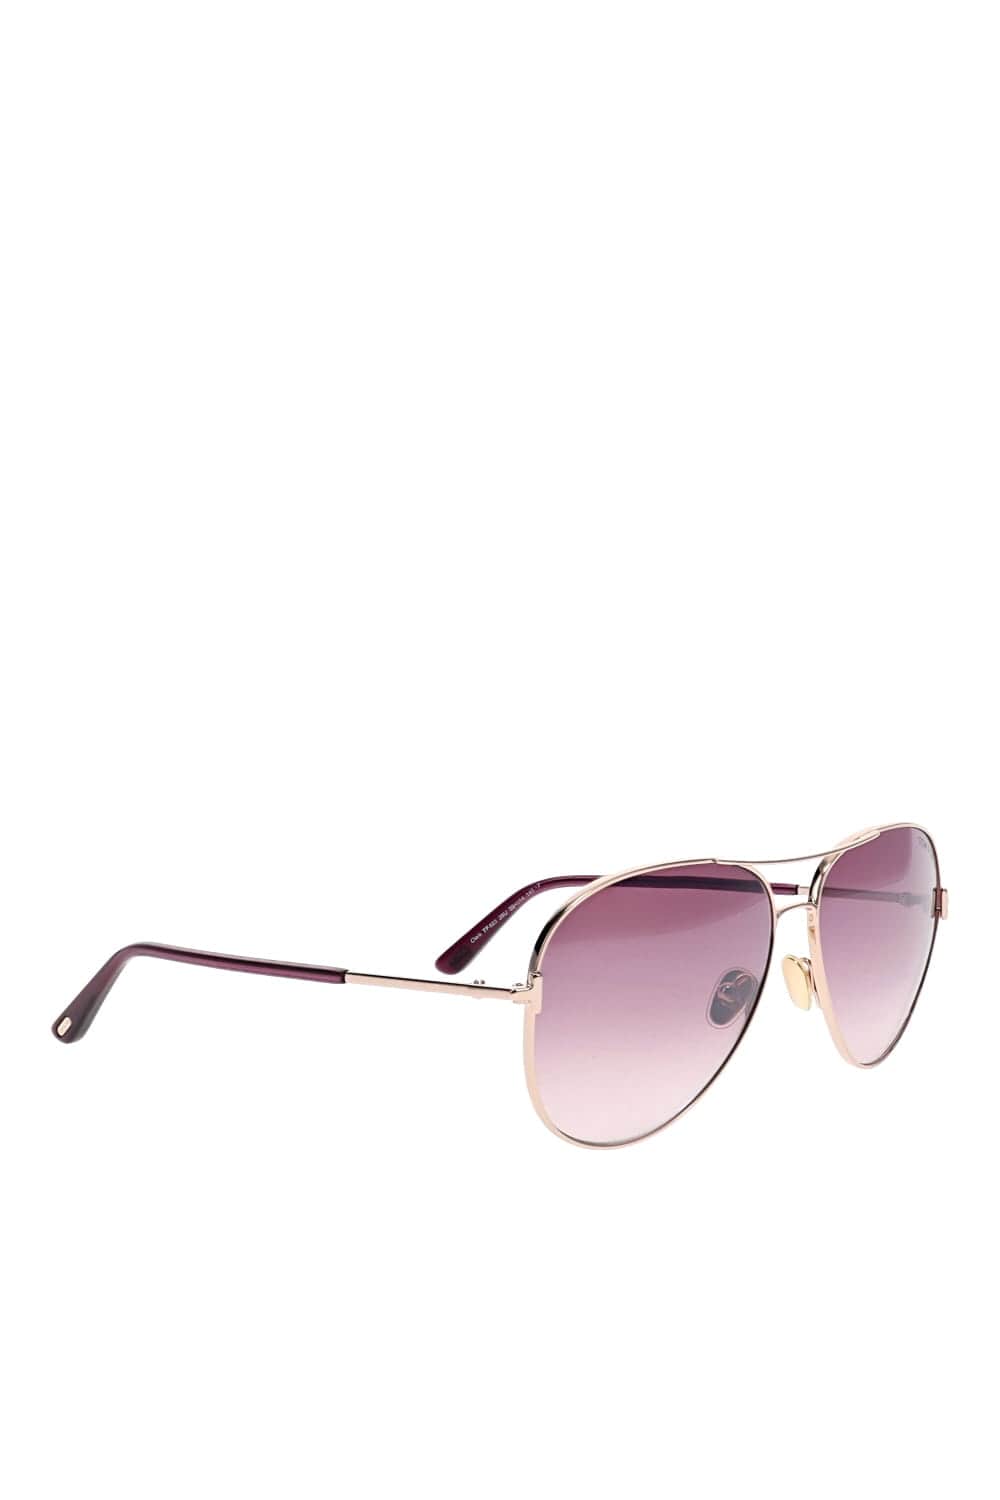 Tom Ford Eyewear Clark Pink Bordeaux Aviator Sunglasses